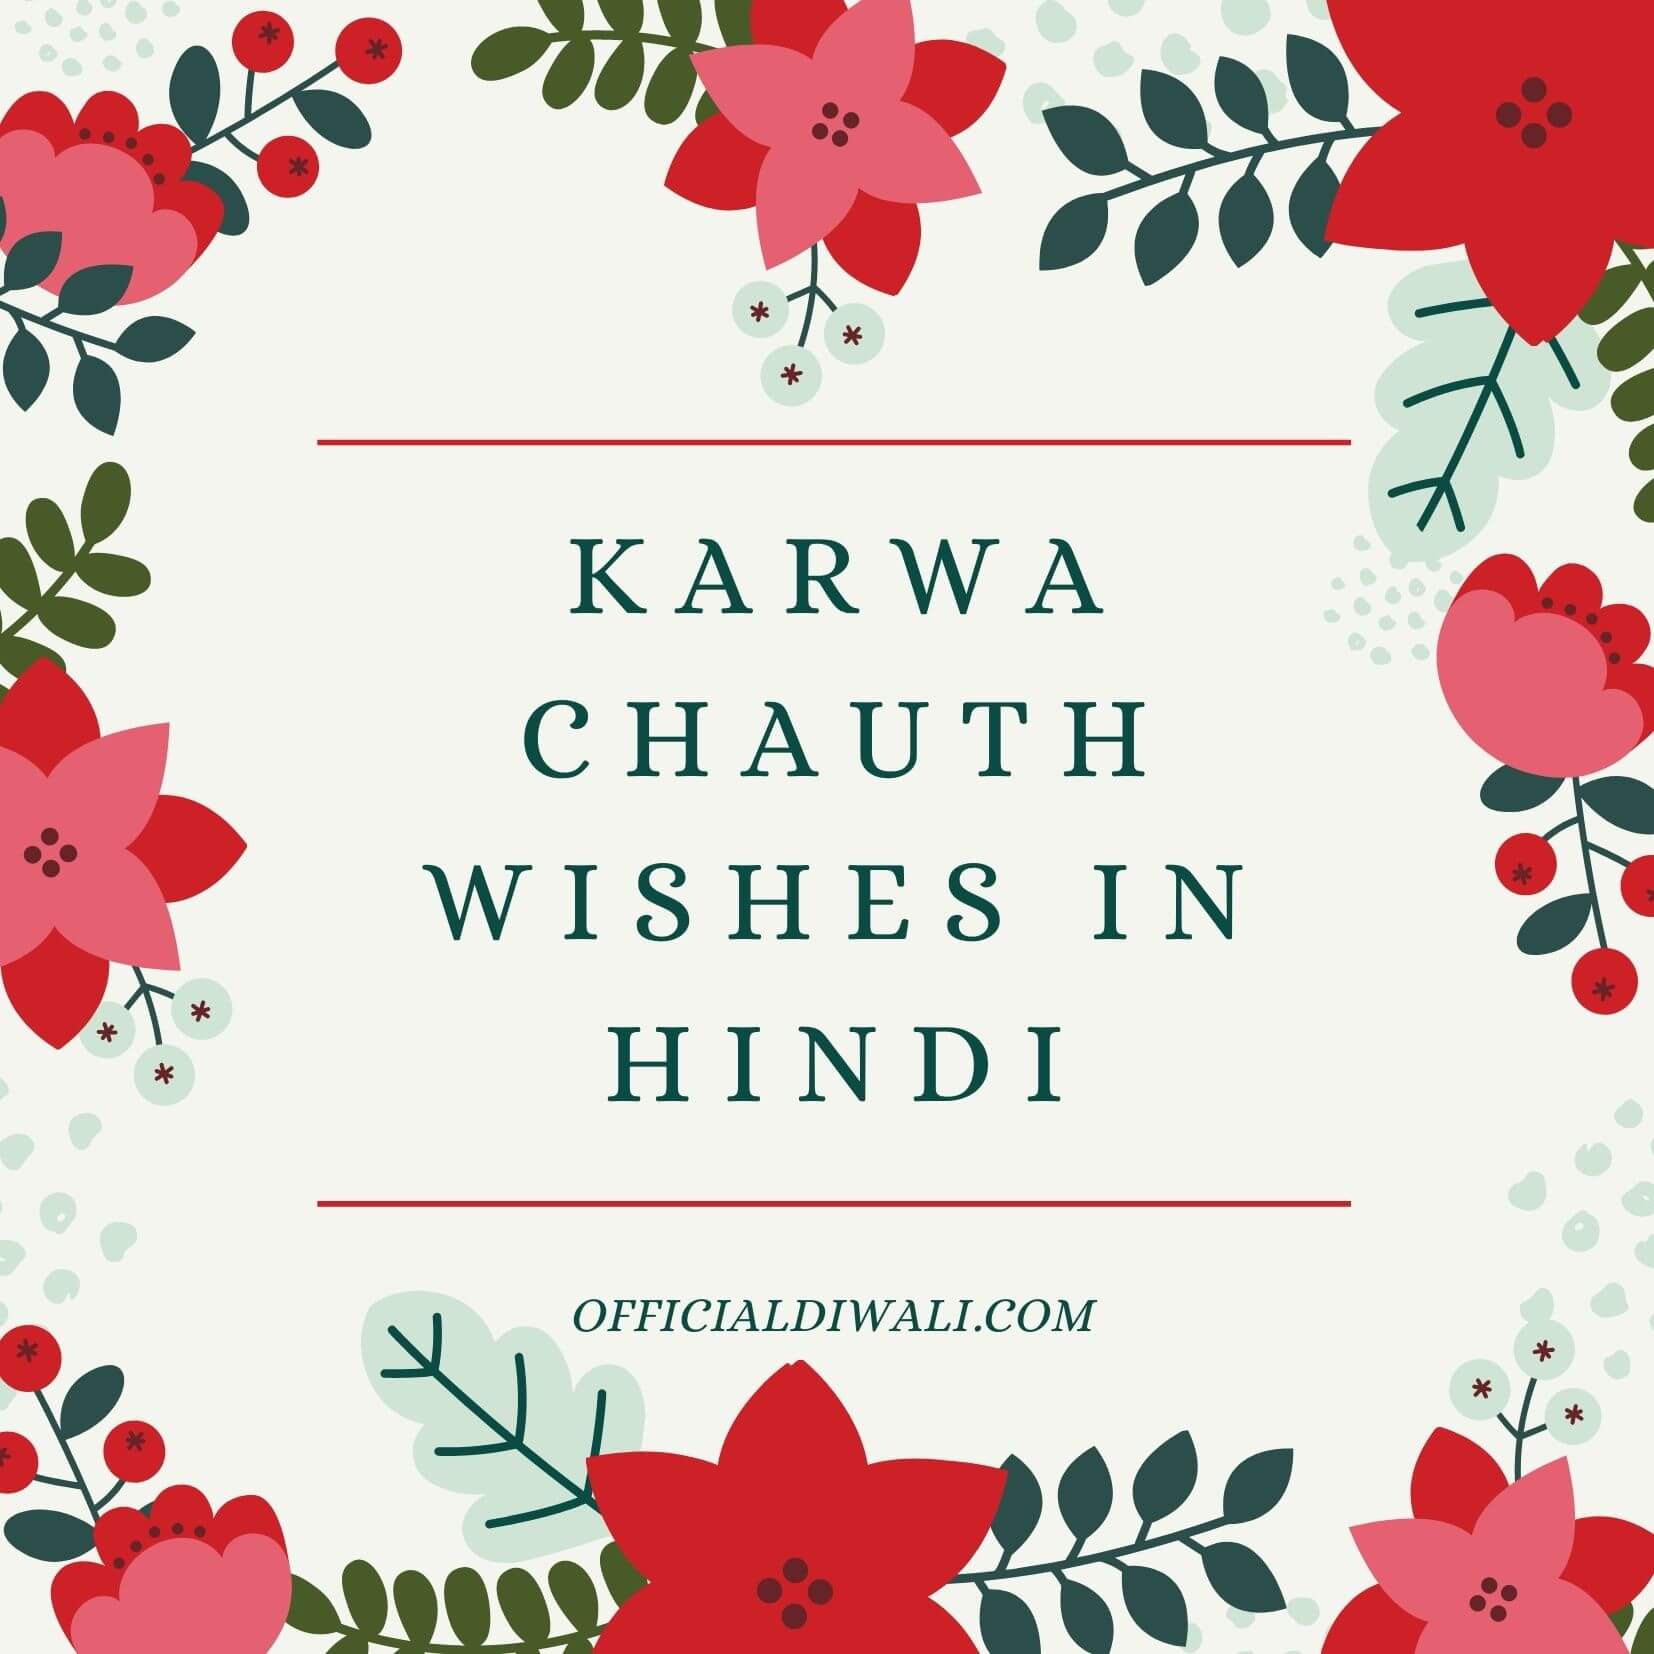 Karwa Chauth Wishes in Hindi 2020 OFFICIALDIWALI.COM